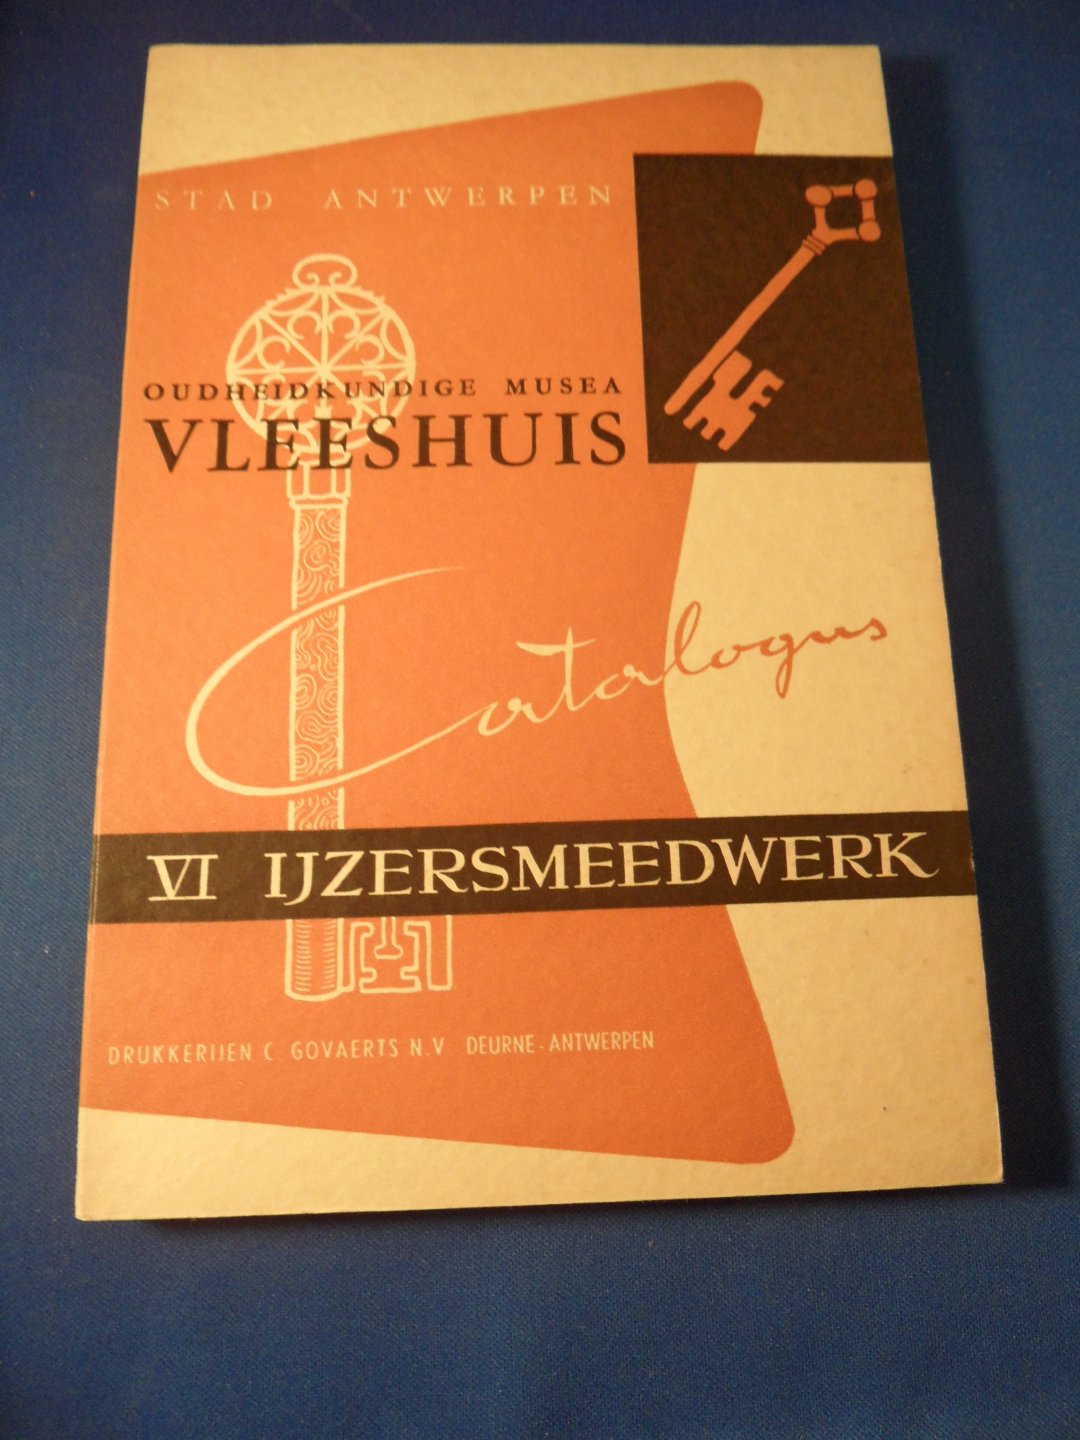 Oudheidkundige Musea Stad Antwerpen - Catalogus VI Ijzersmeedwerk